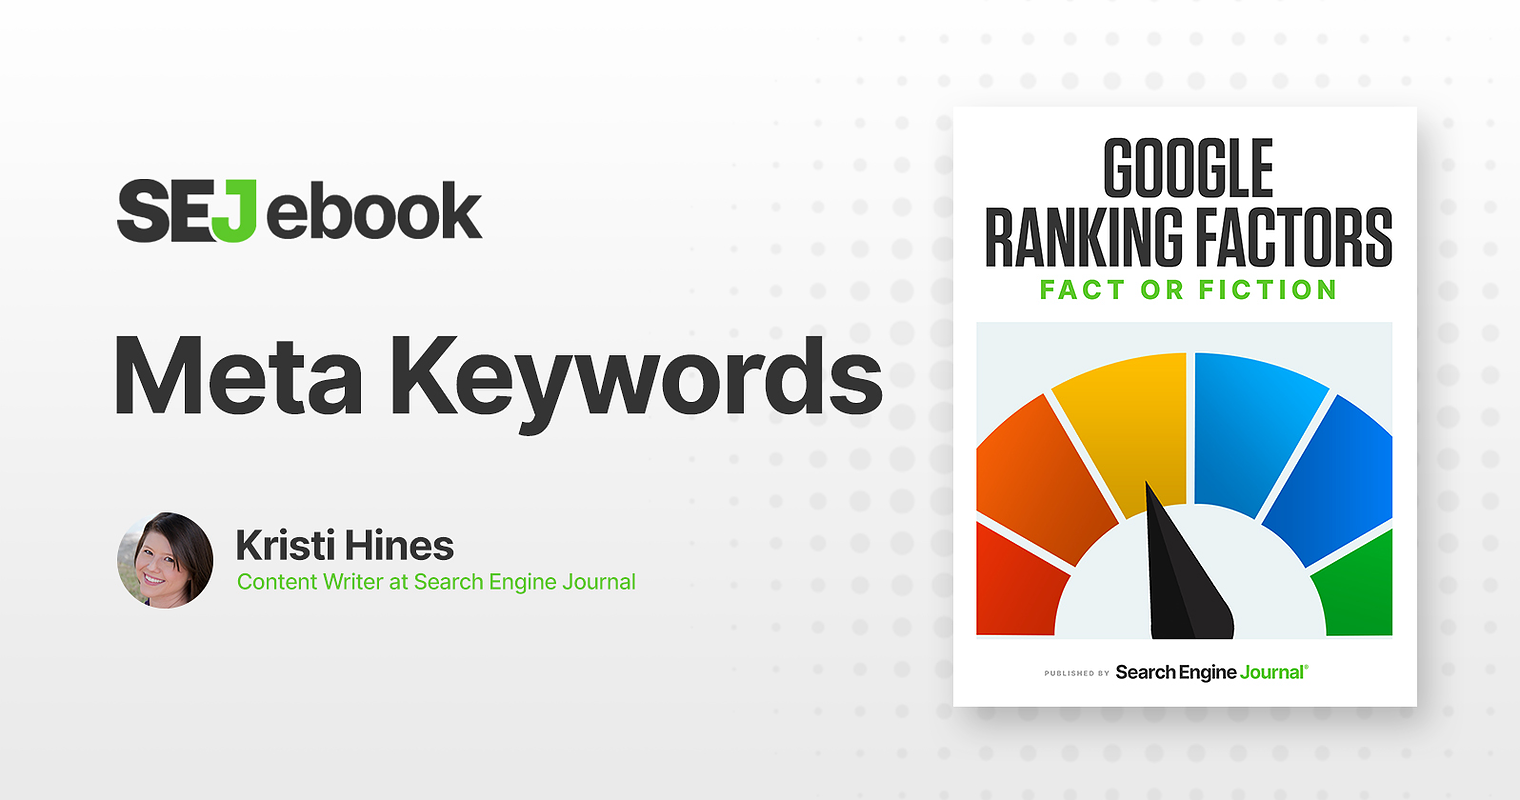 Are Meta Keywords A Google Ranking Factor?